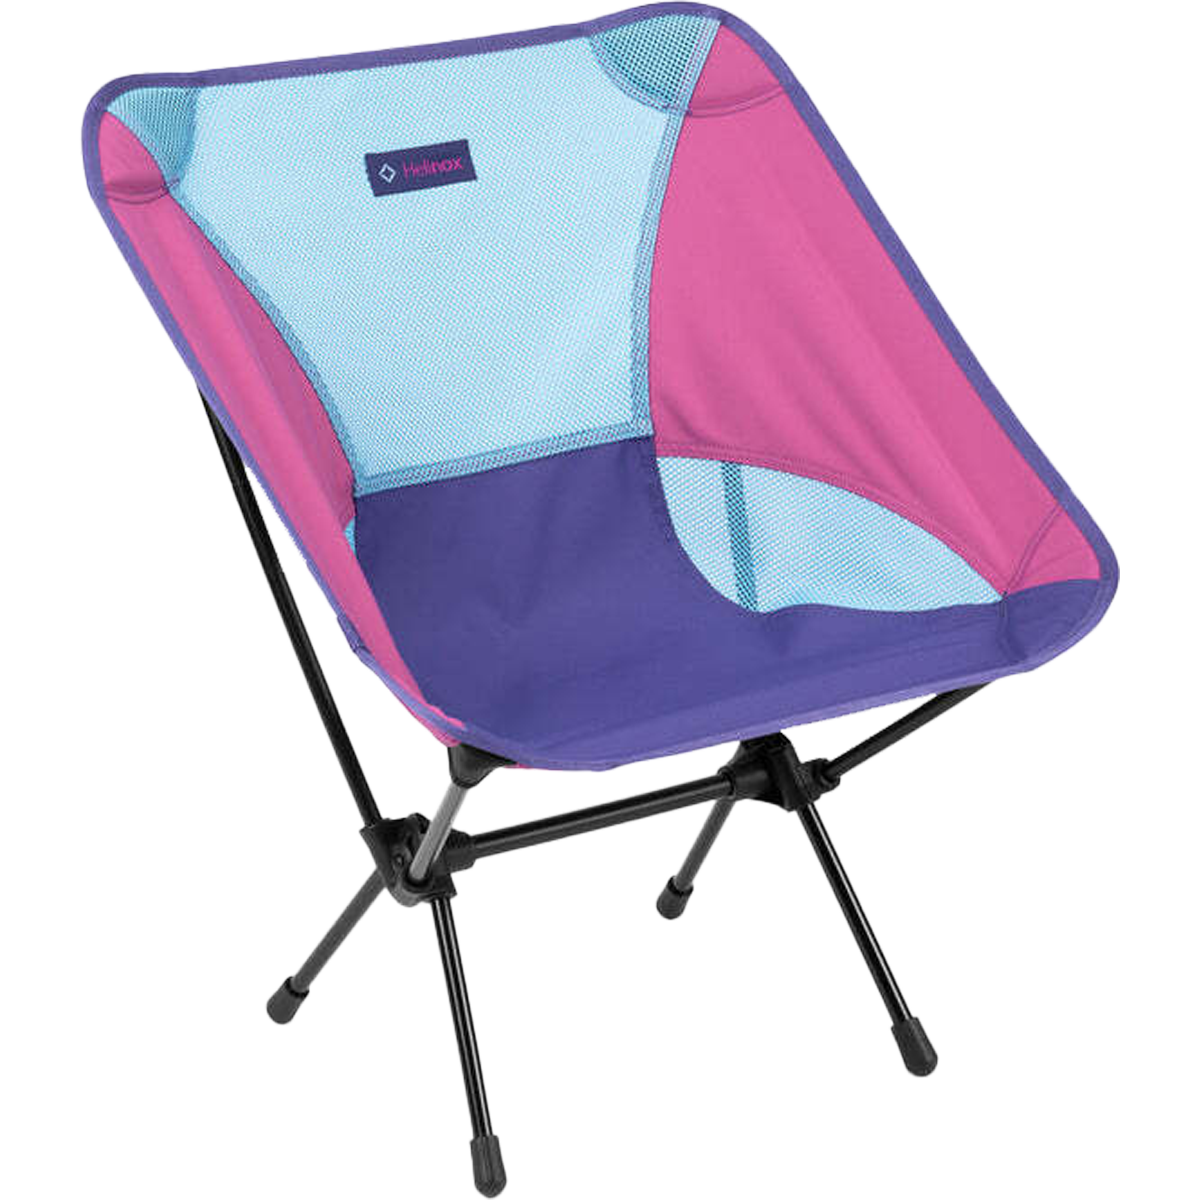 Chair One – Sports Basement